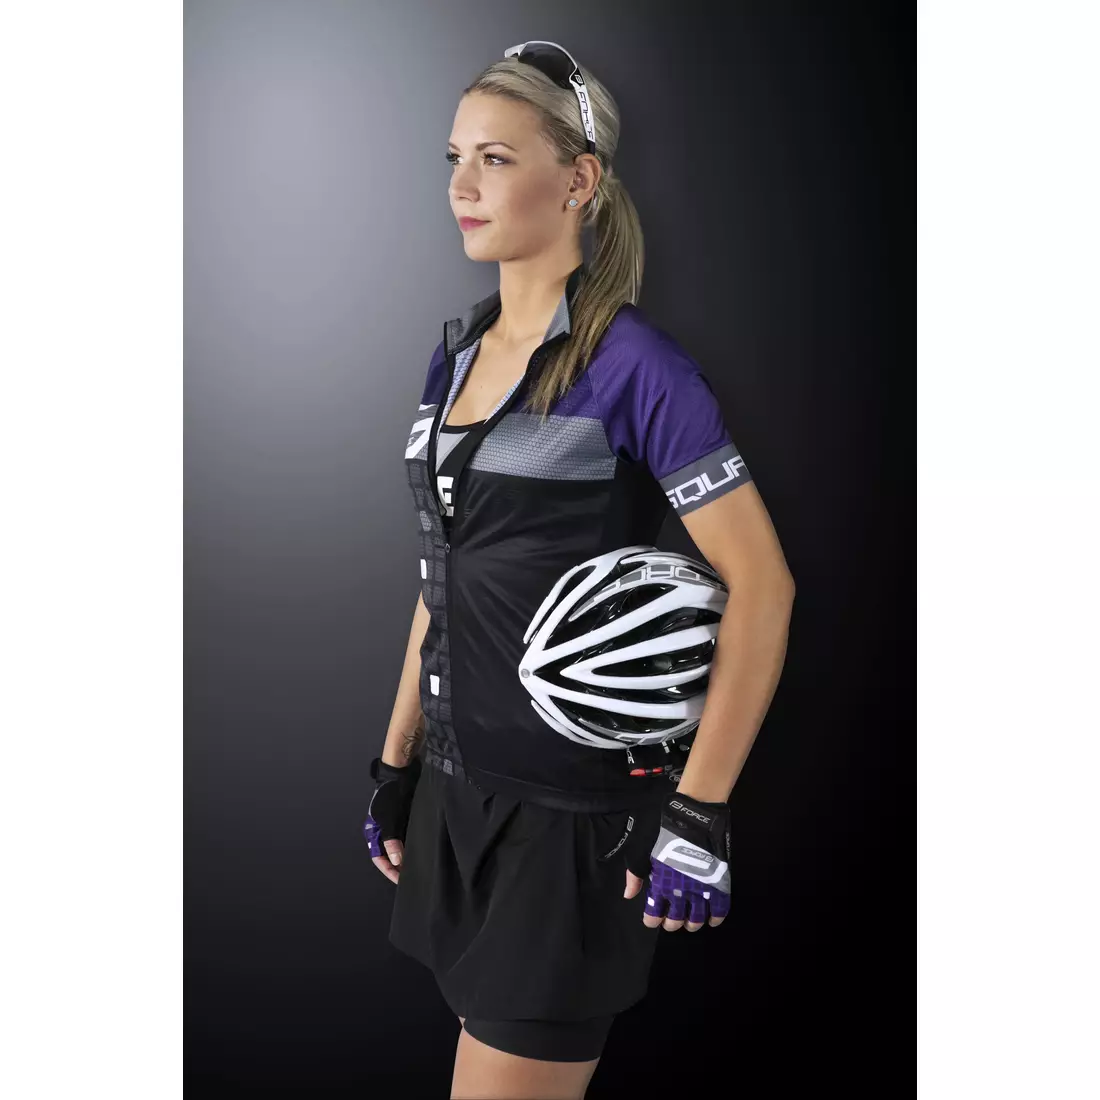 FORCE women's cycling jersey SQUARE black/purple 90013431